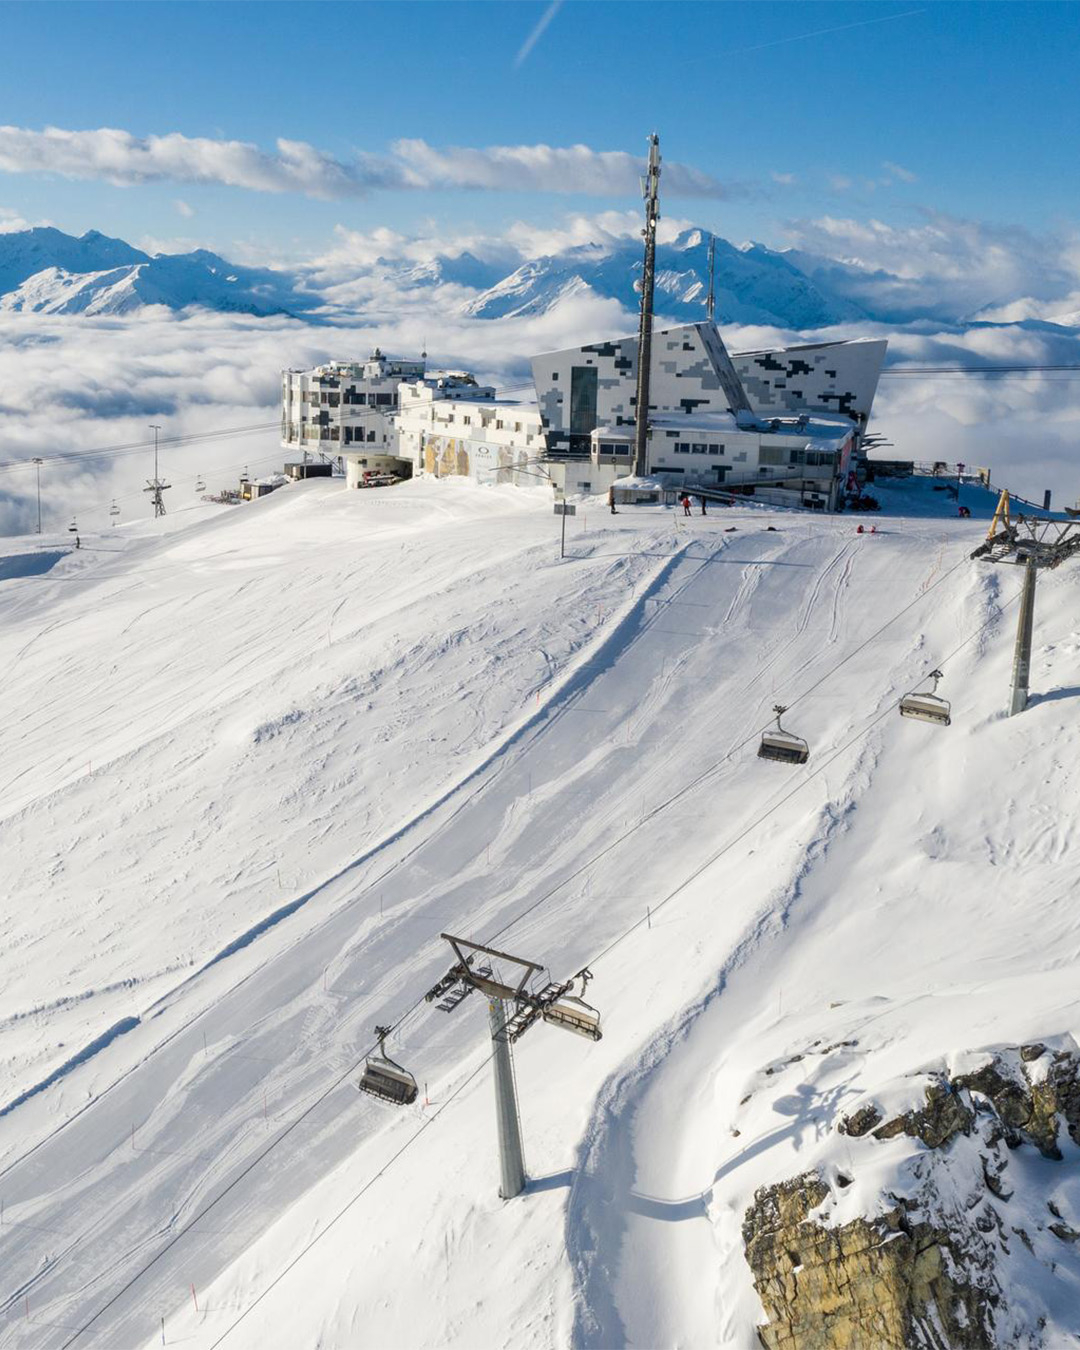 Laax-Flims-Falera Ski Resort in Switzerland